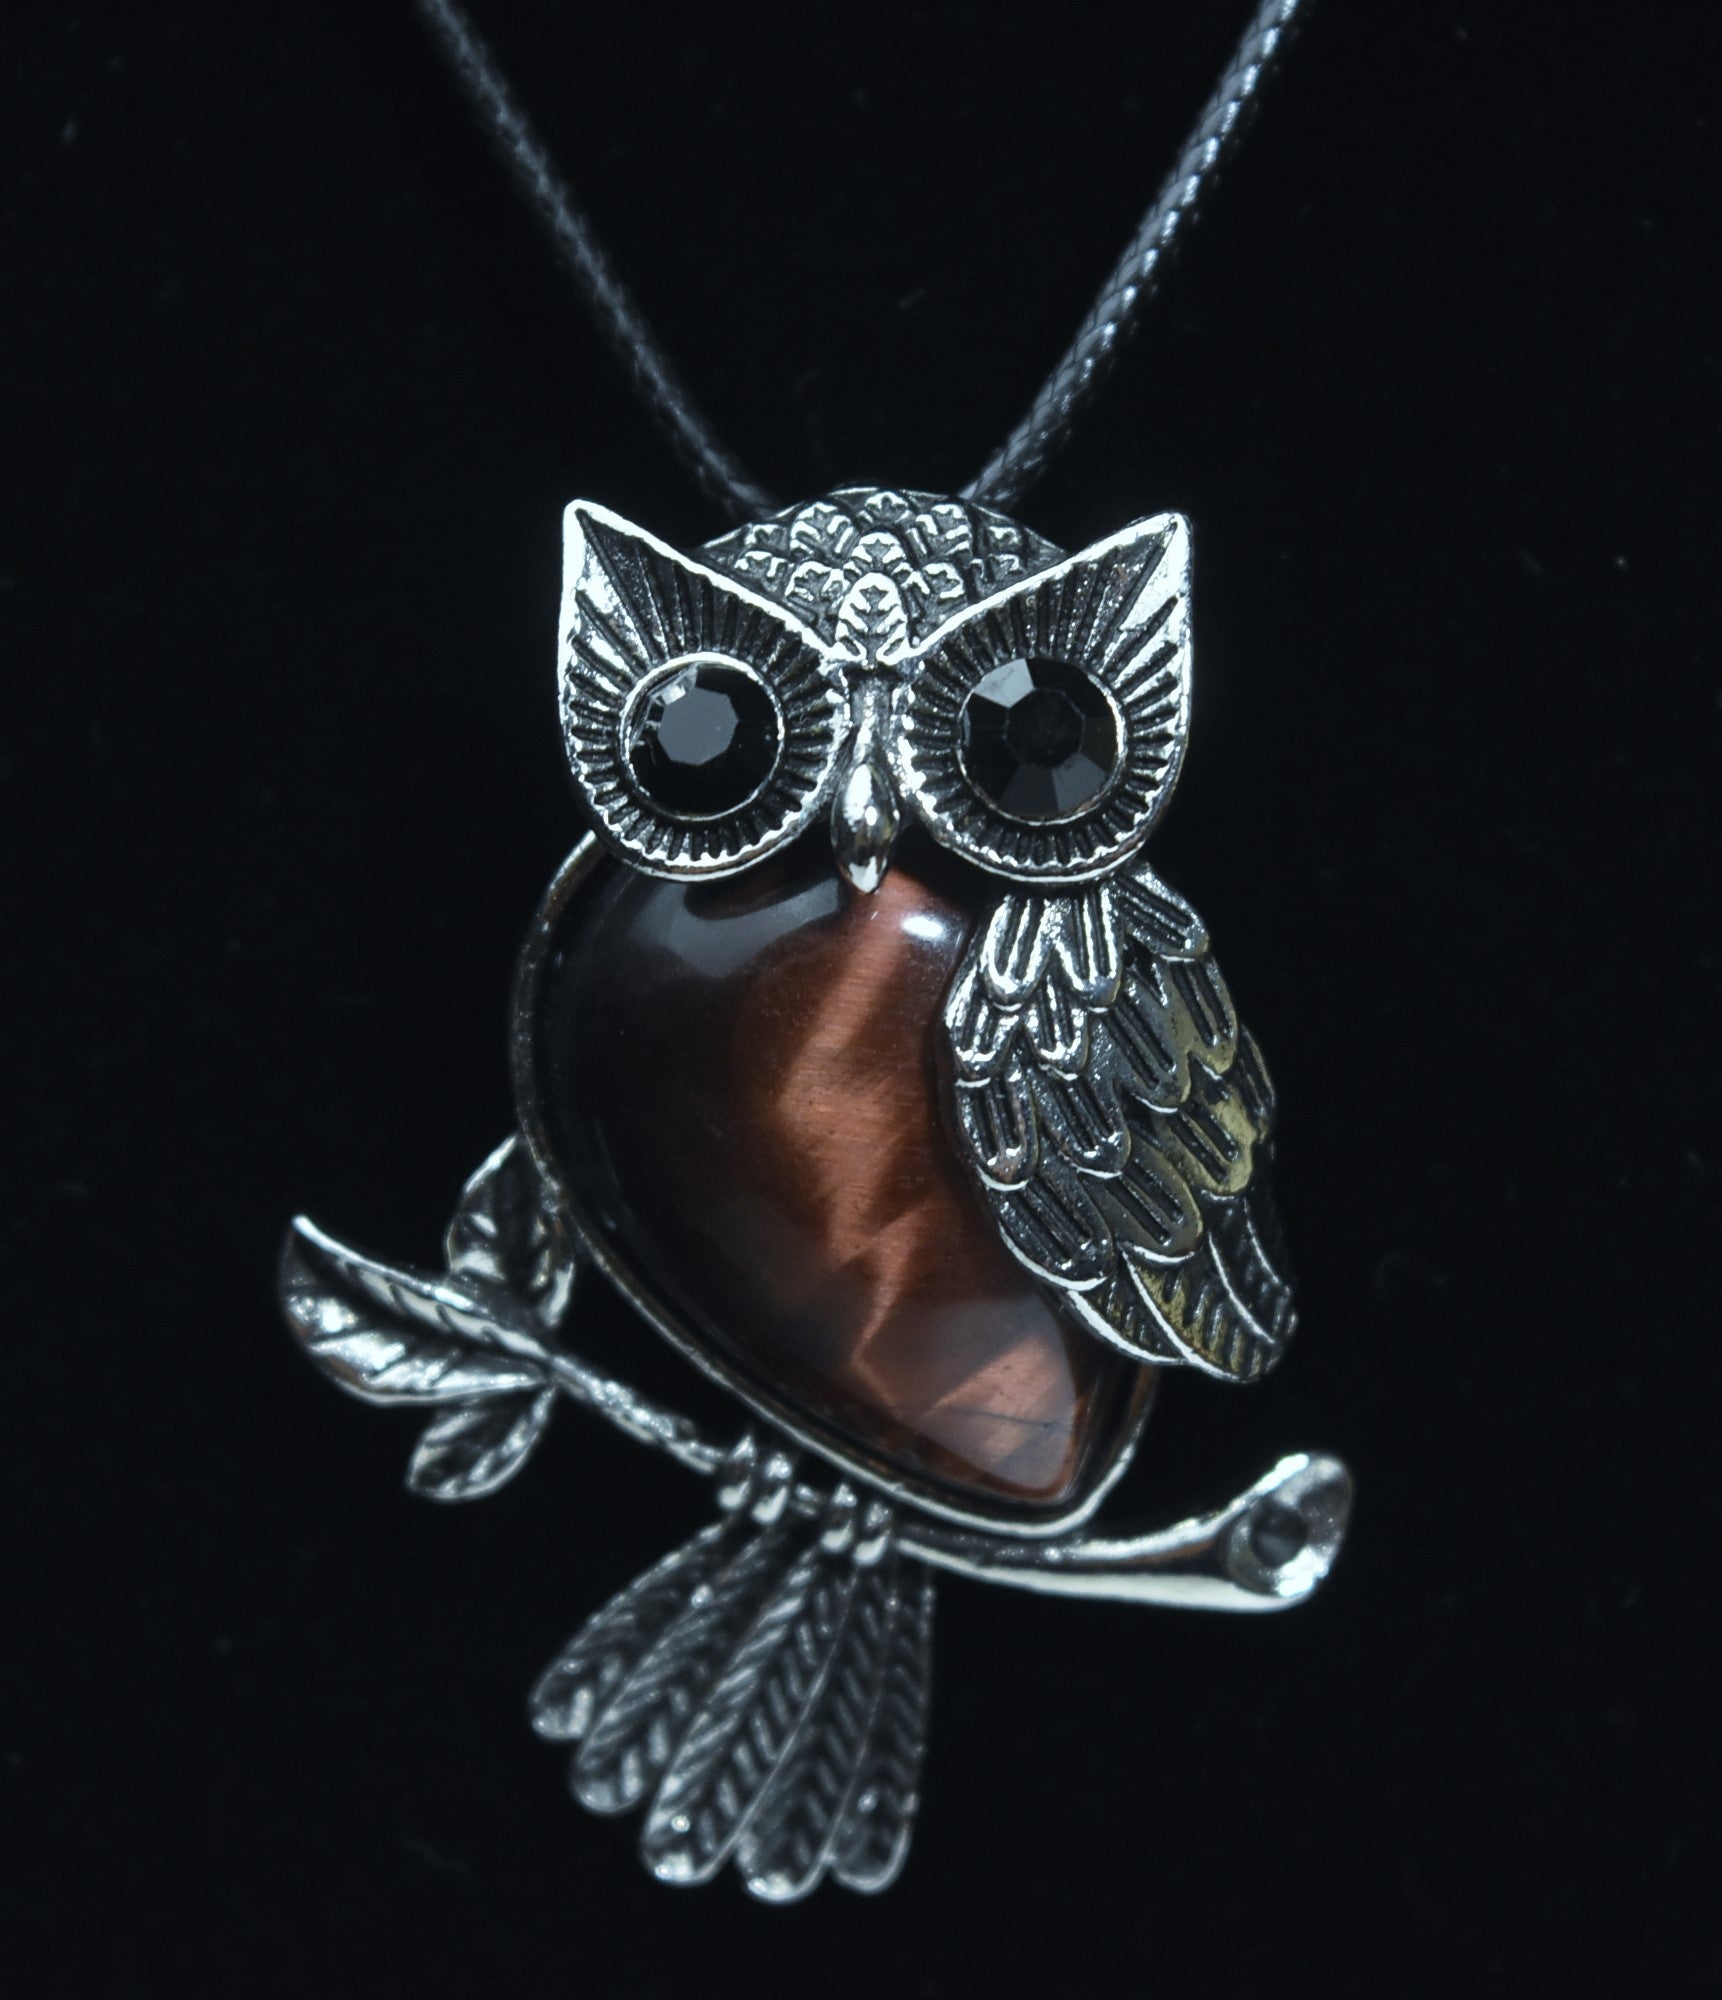 Tiger's Eye Owl Pendant with Black Onyx Eyes on Black Silk Cord Necklace